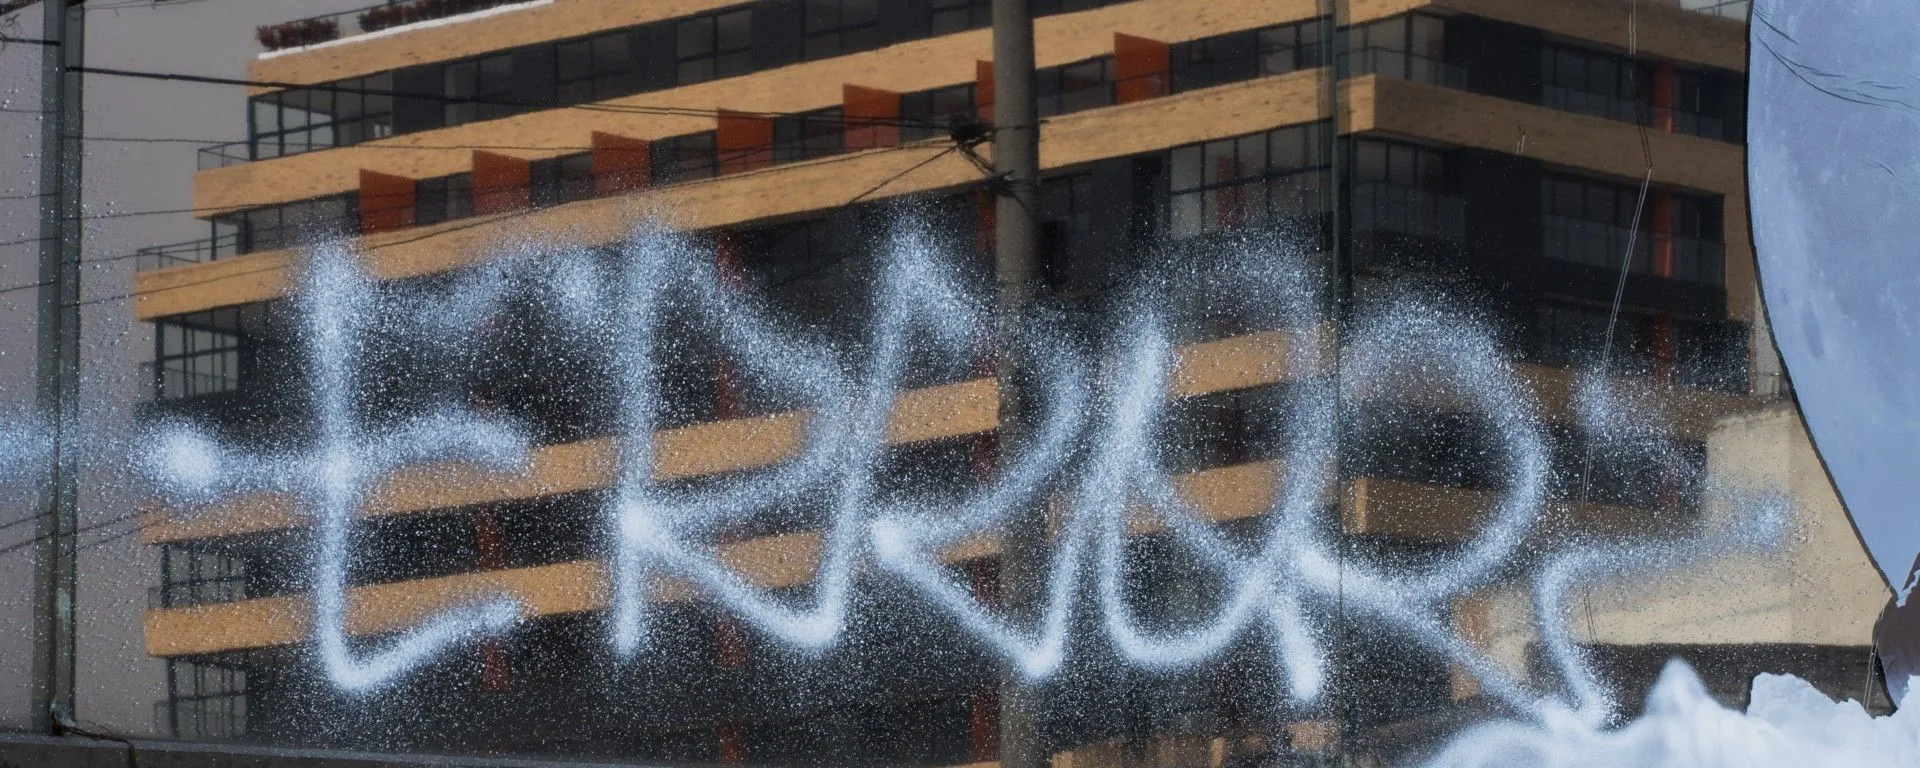 Tags icónicos: el graffiti bogotano grita 